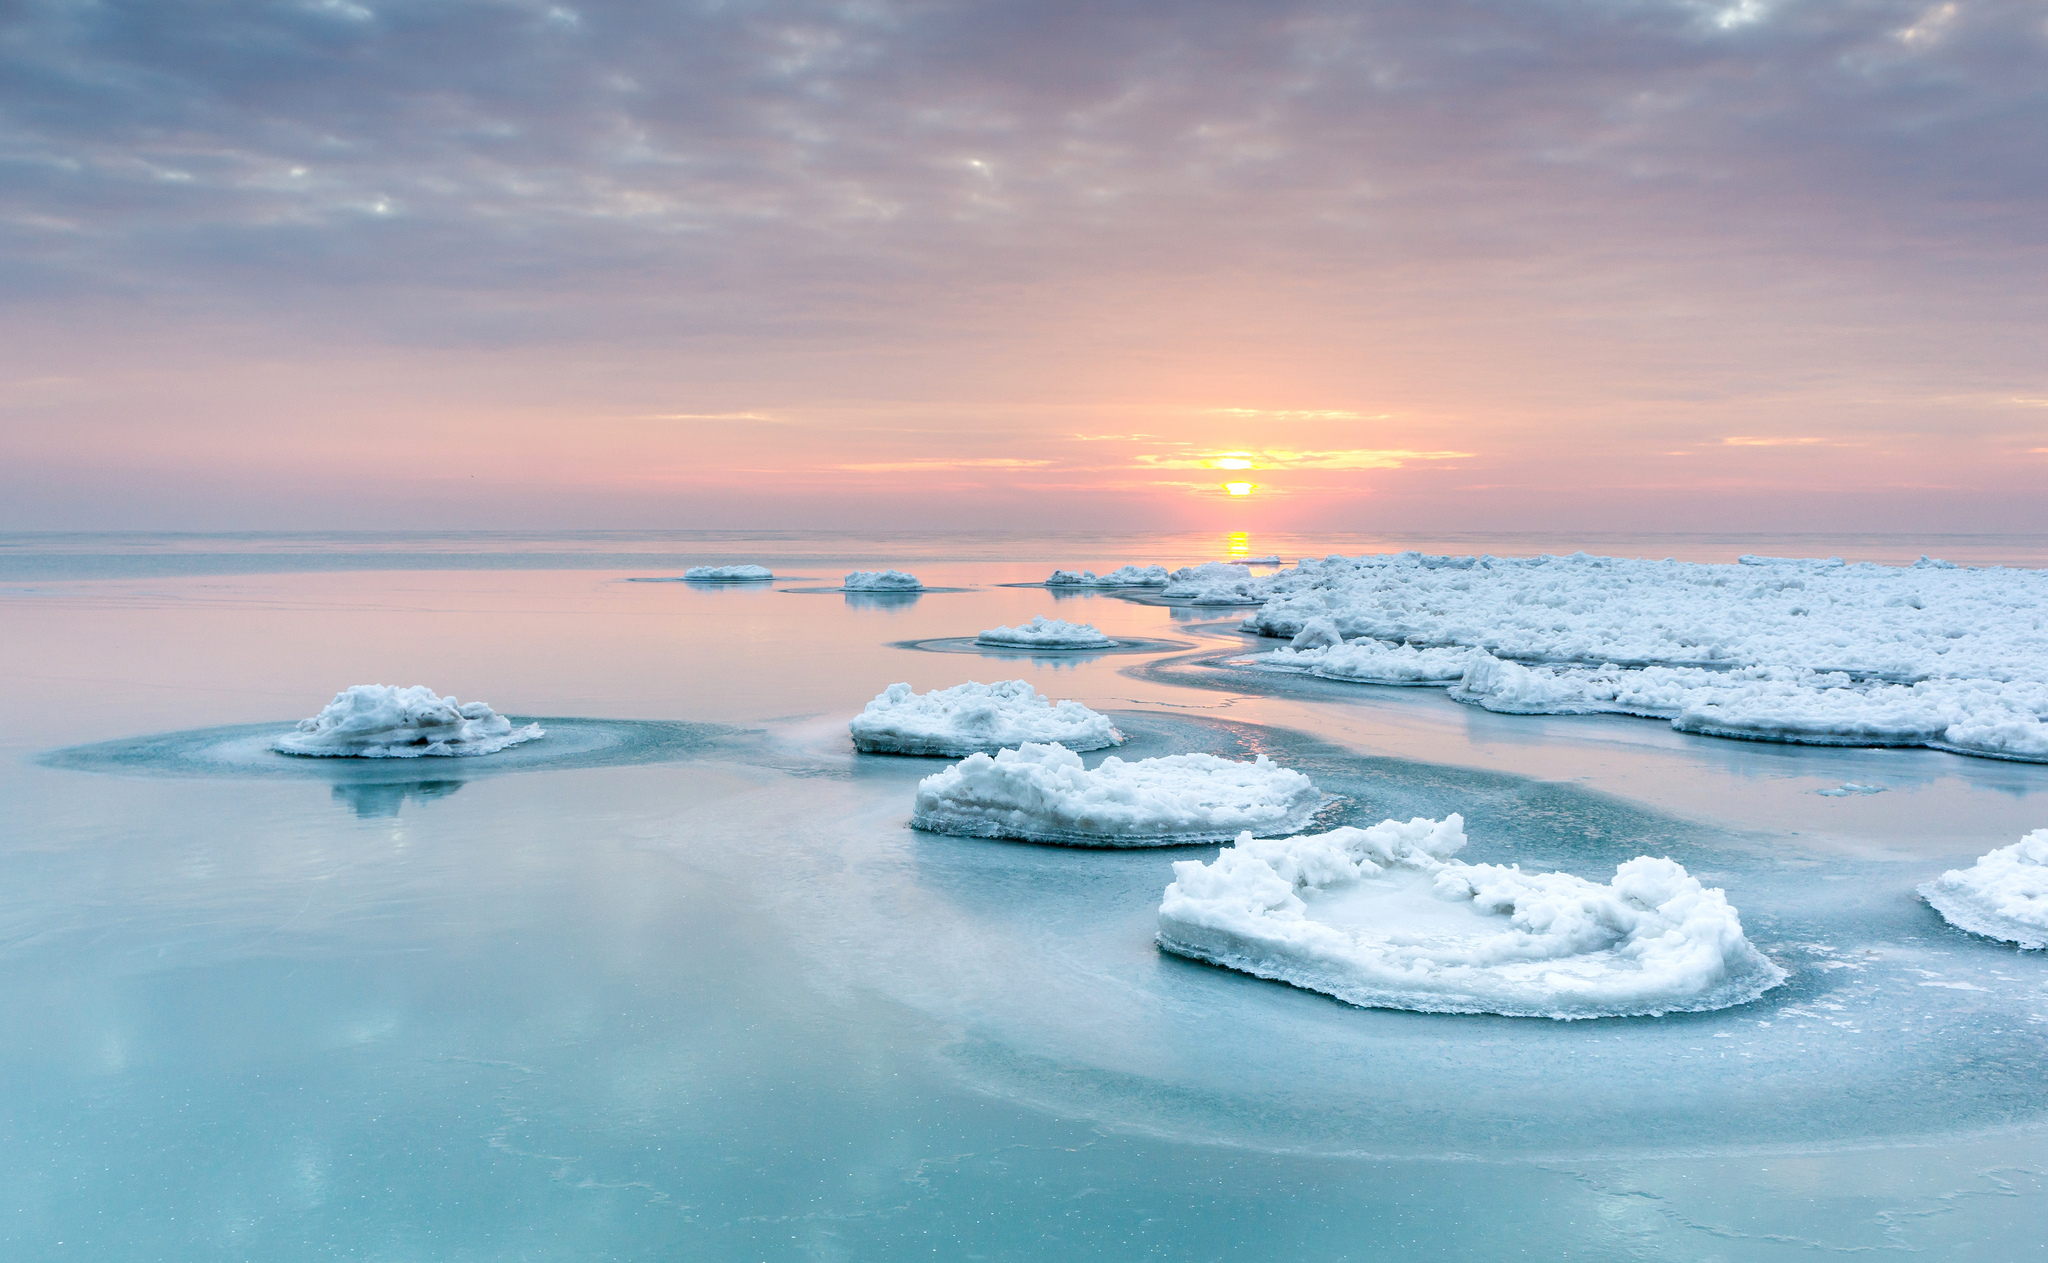  Sunrise on a frozen Lake Michigan, Chicago. [2048x1263] 